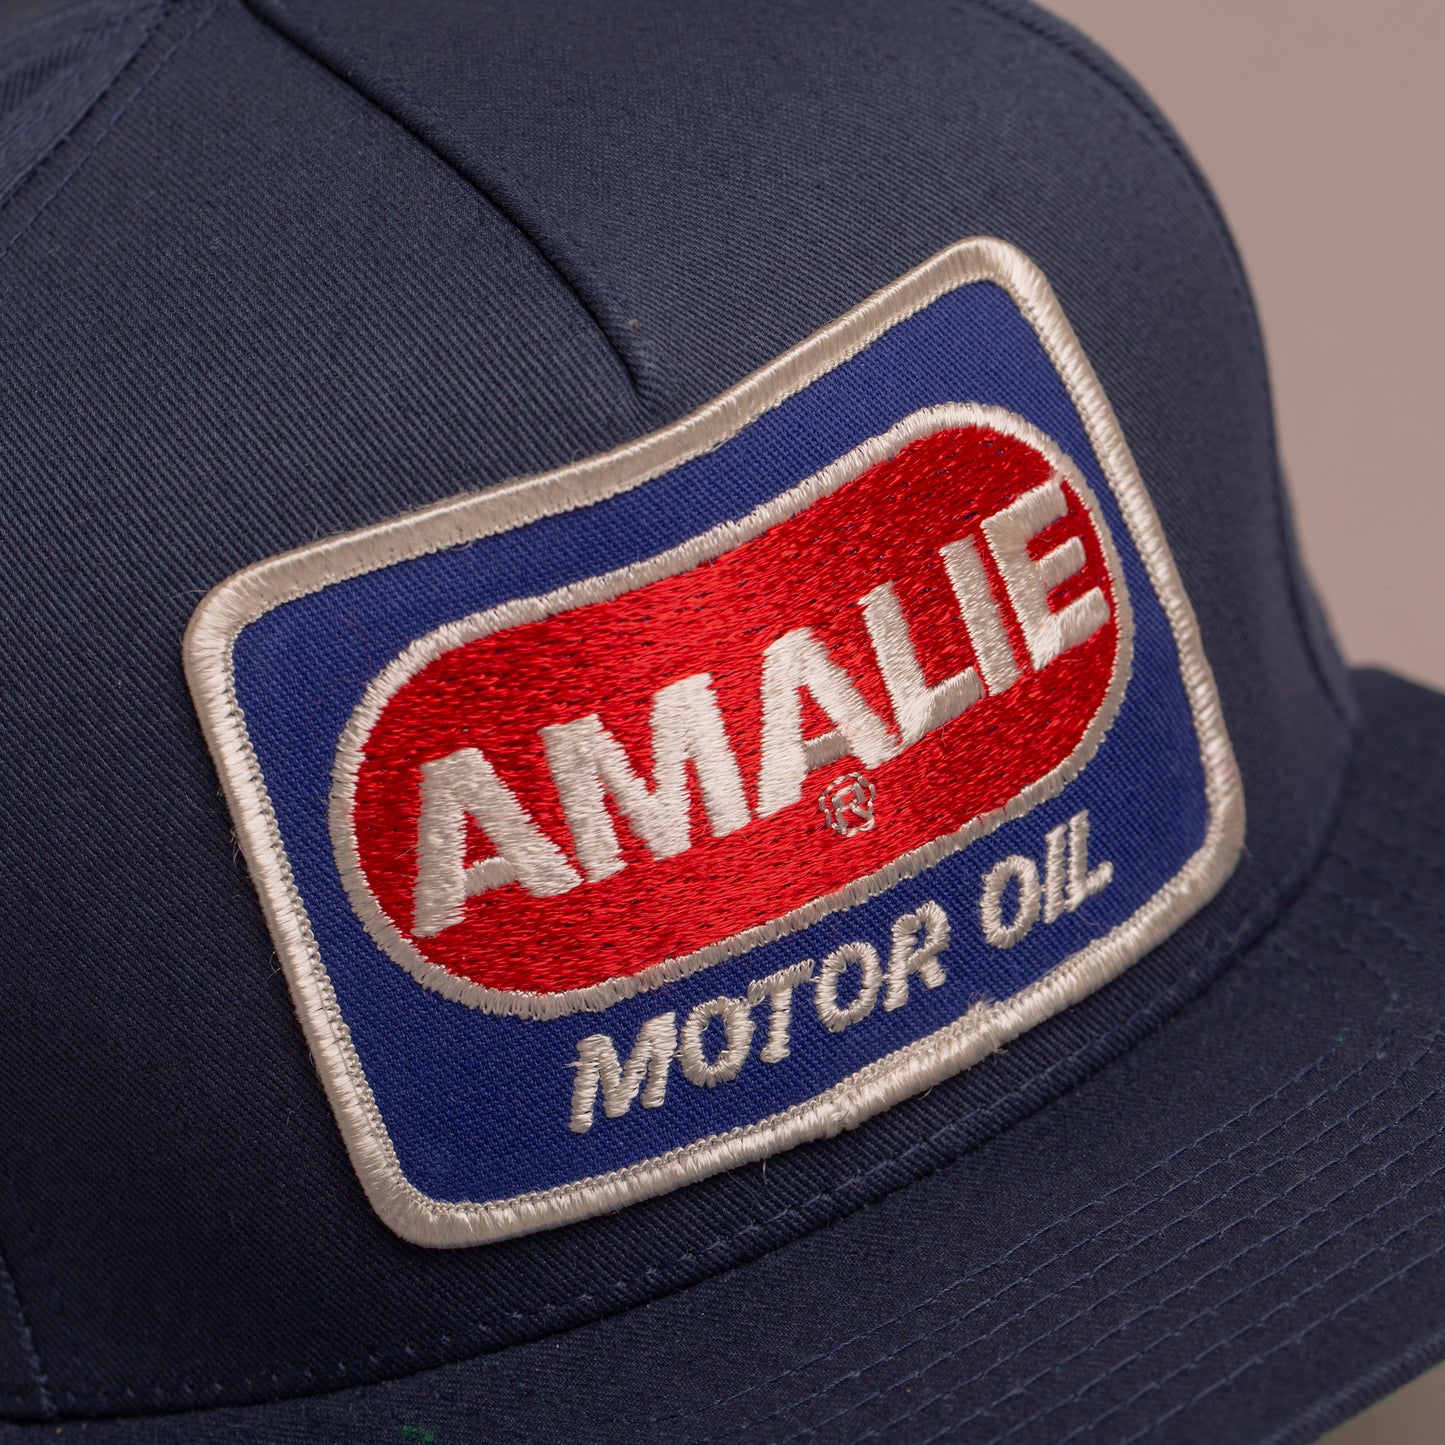 Amalie Motor Oil